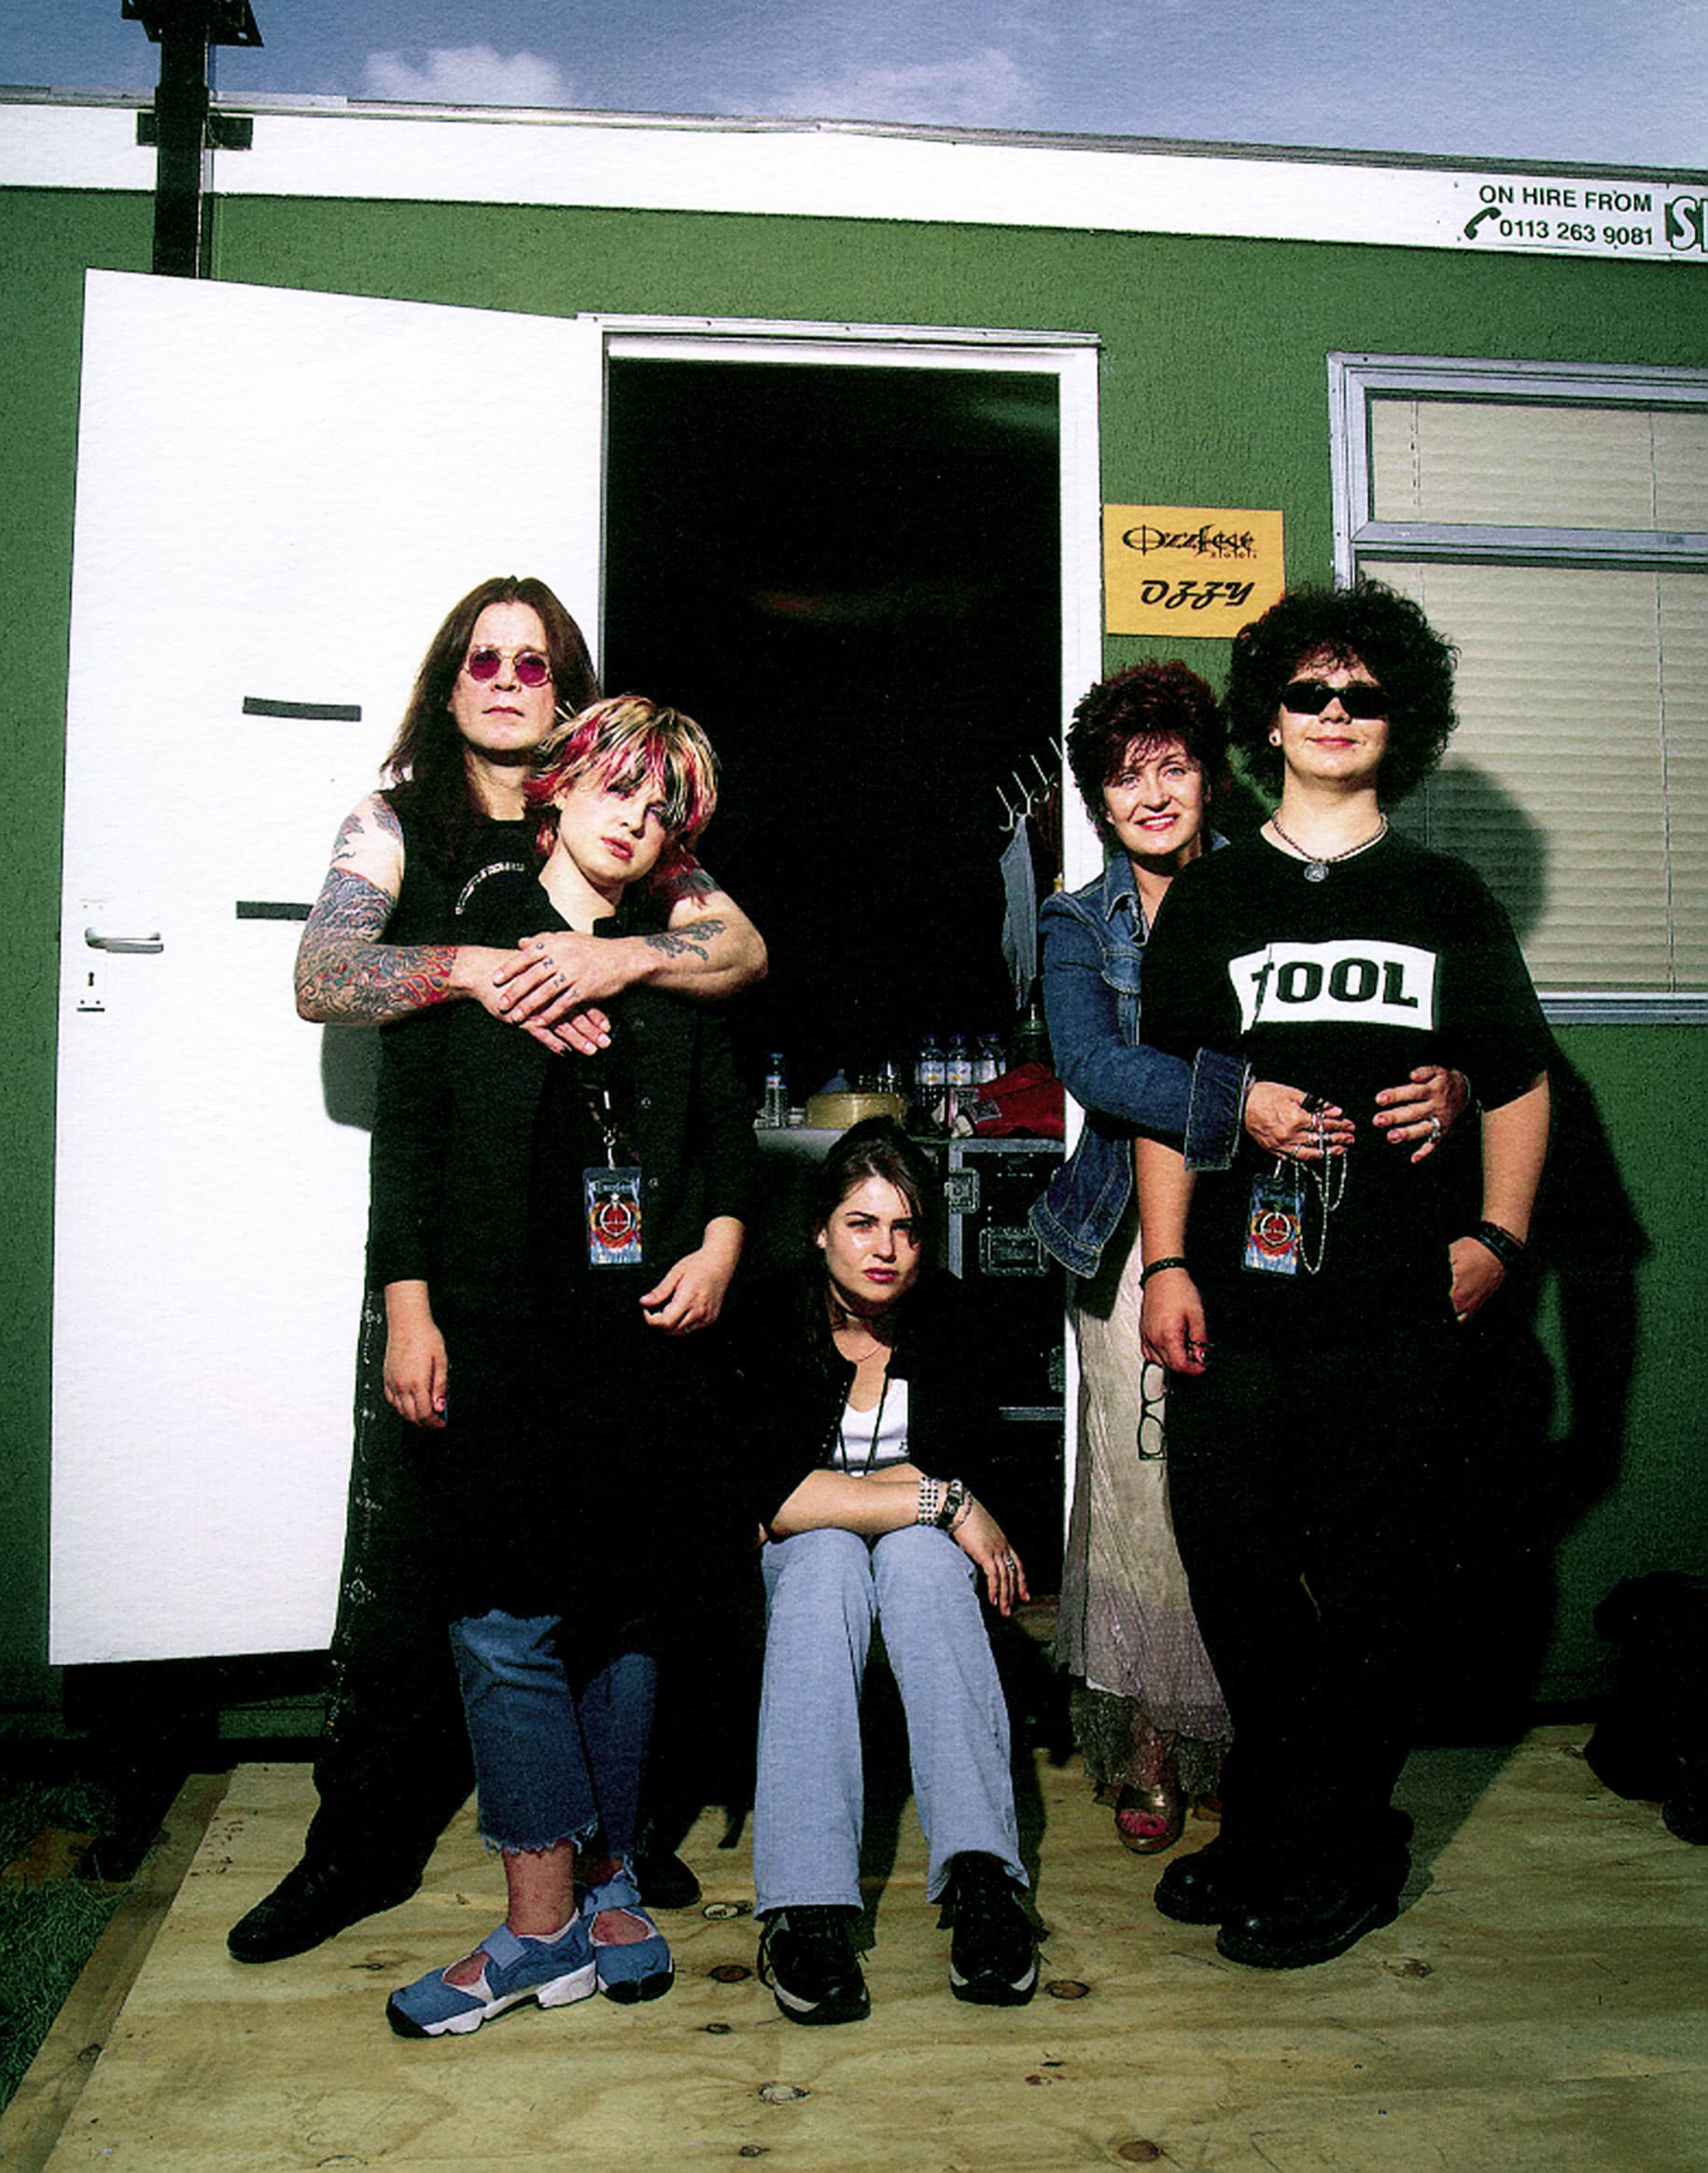 THE OSBOURNES, Ozzy Osbourne, Kelly Osbourne, Aimee Osbourne, Sharon Osbourne, Jack Osbourne, 2002-2004